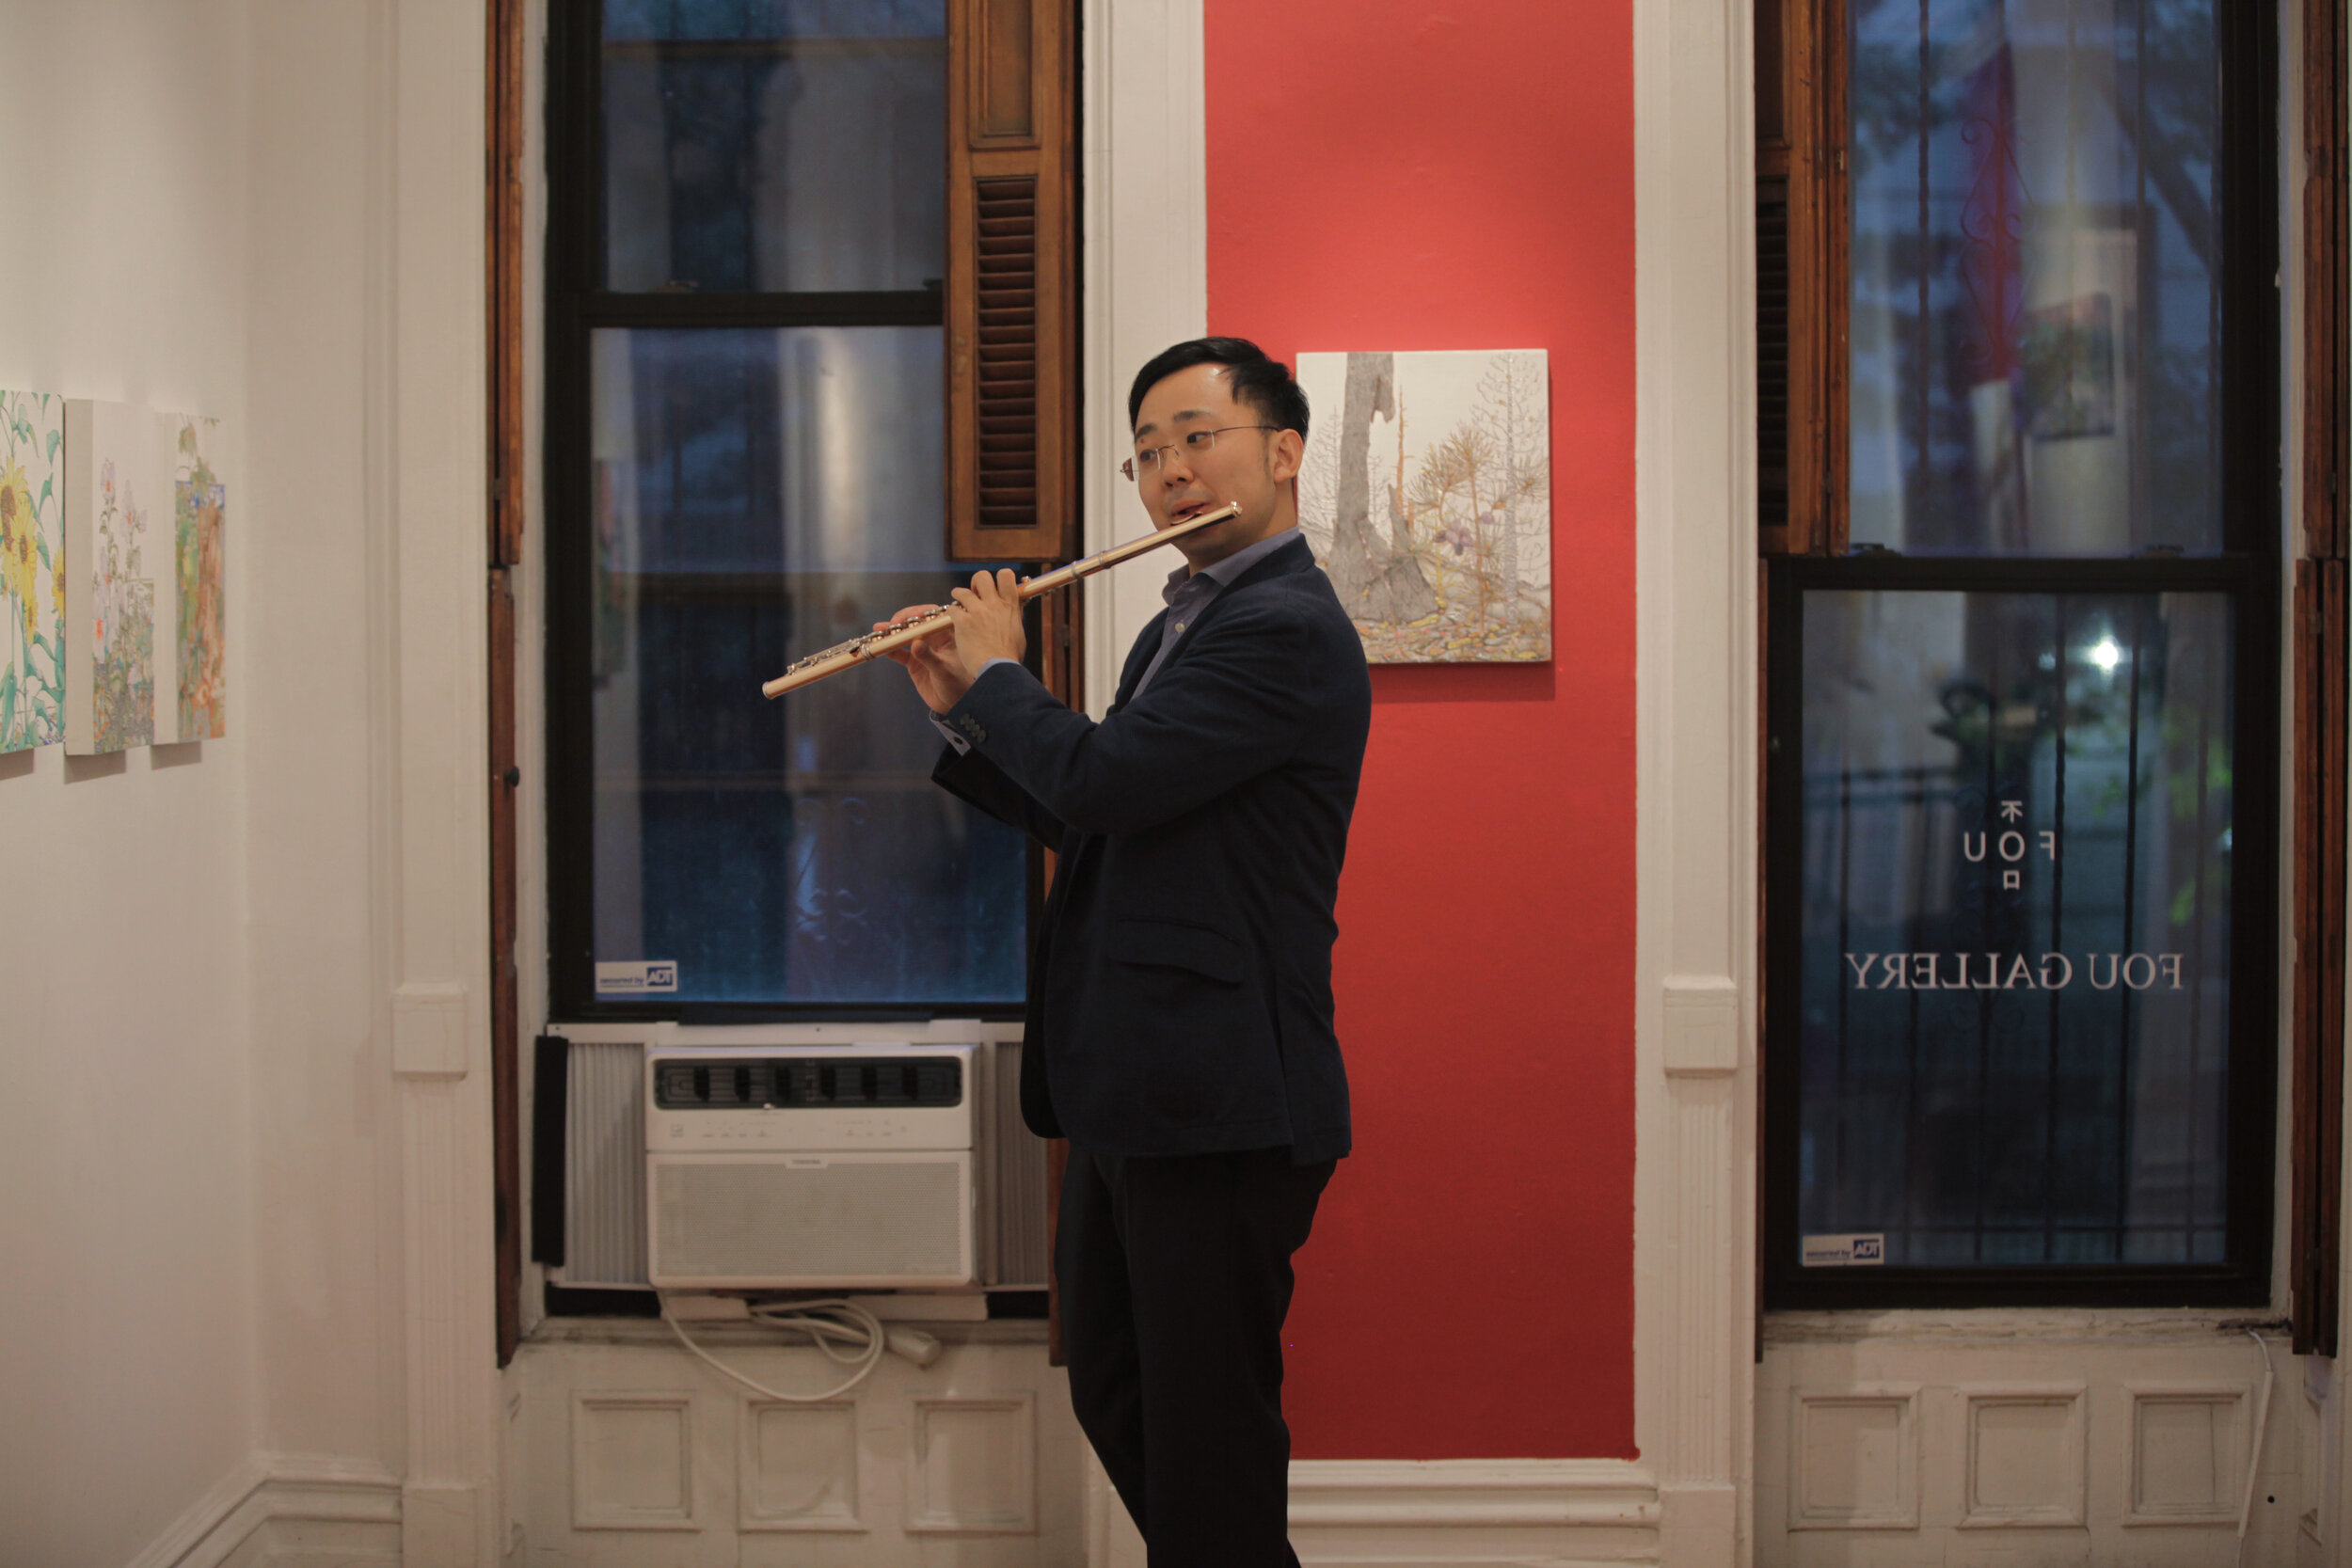   Zuoliang Liu Flute Recital at Present  at Fou Gallery, photo by Jingxin Hu, courtesy Fou Gallery. 